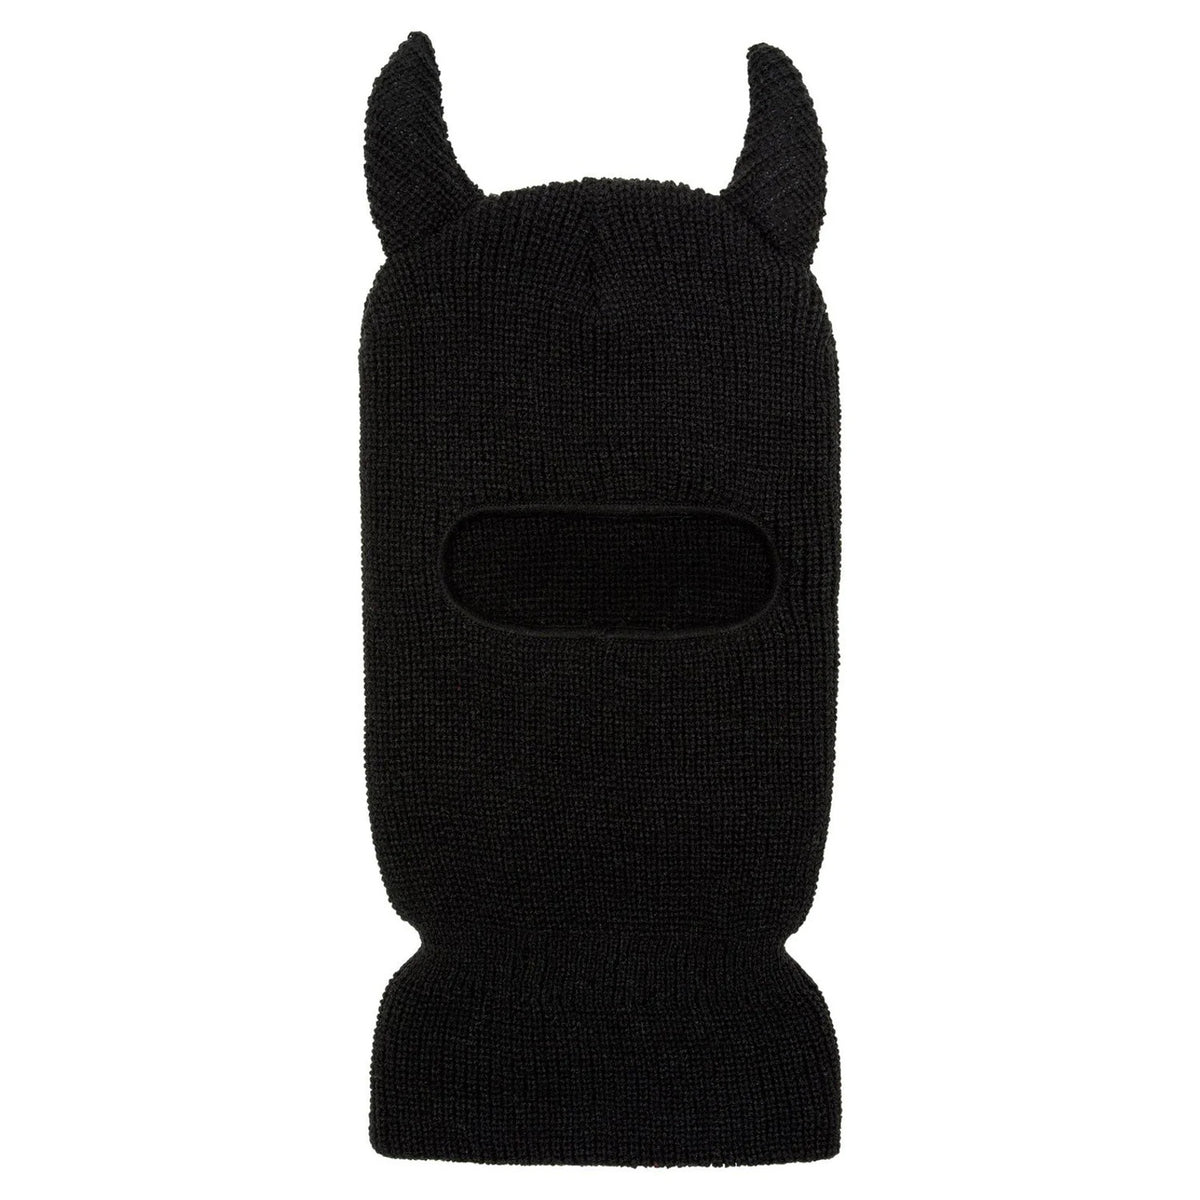 Devil Horns Ski Mask Black